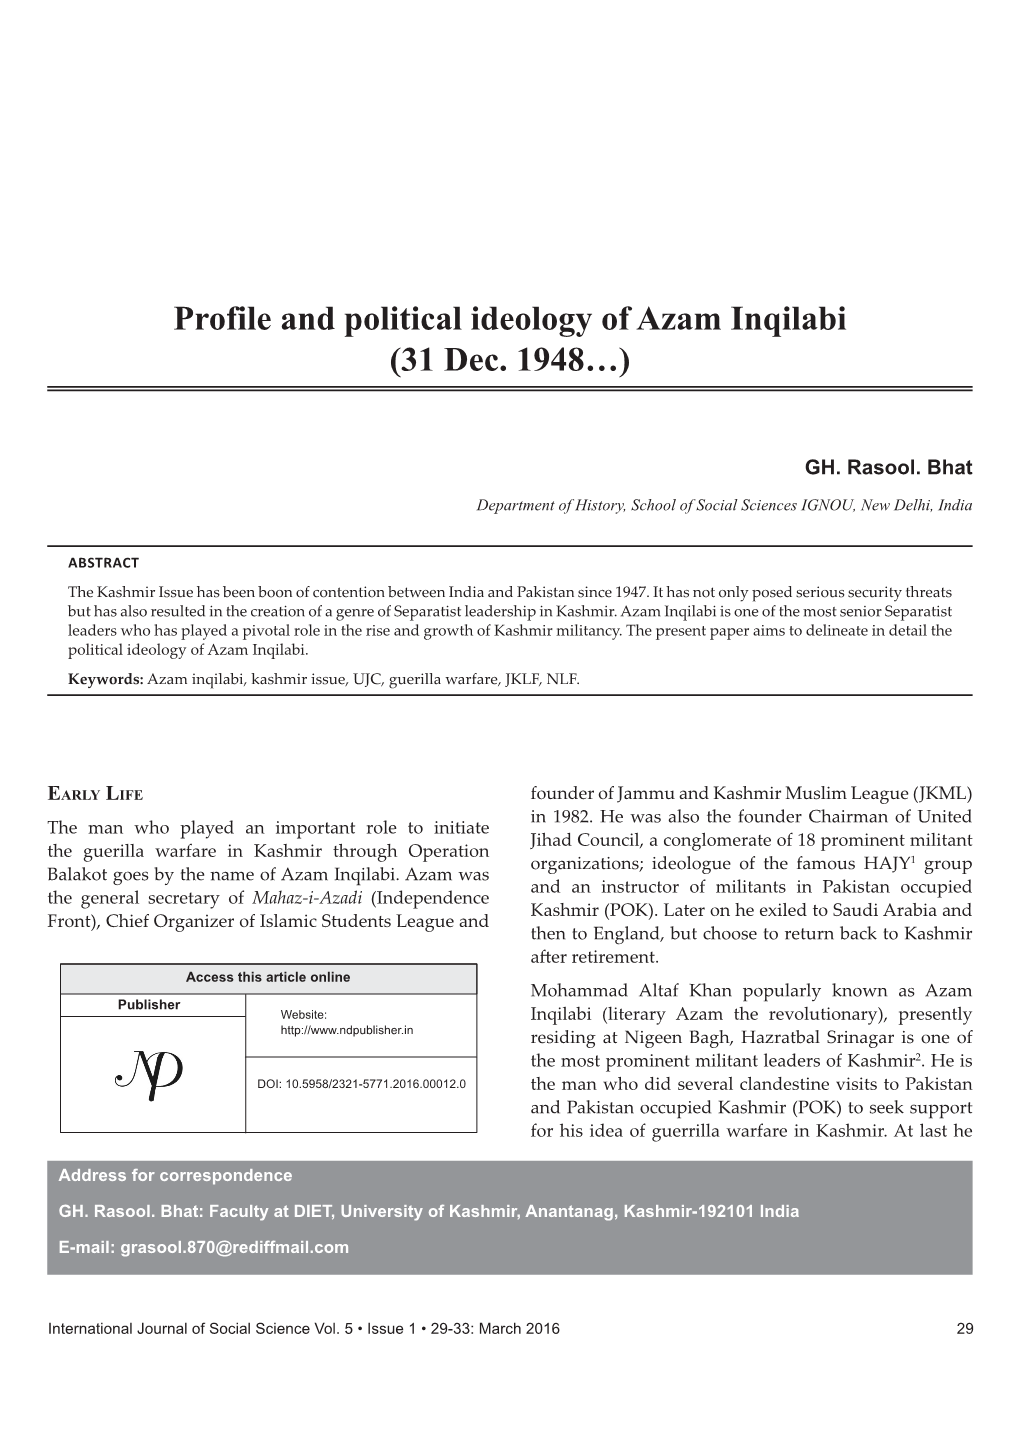 Profile and Political Ideology of Azam Inqilabi (31 Dec